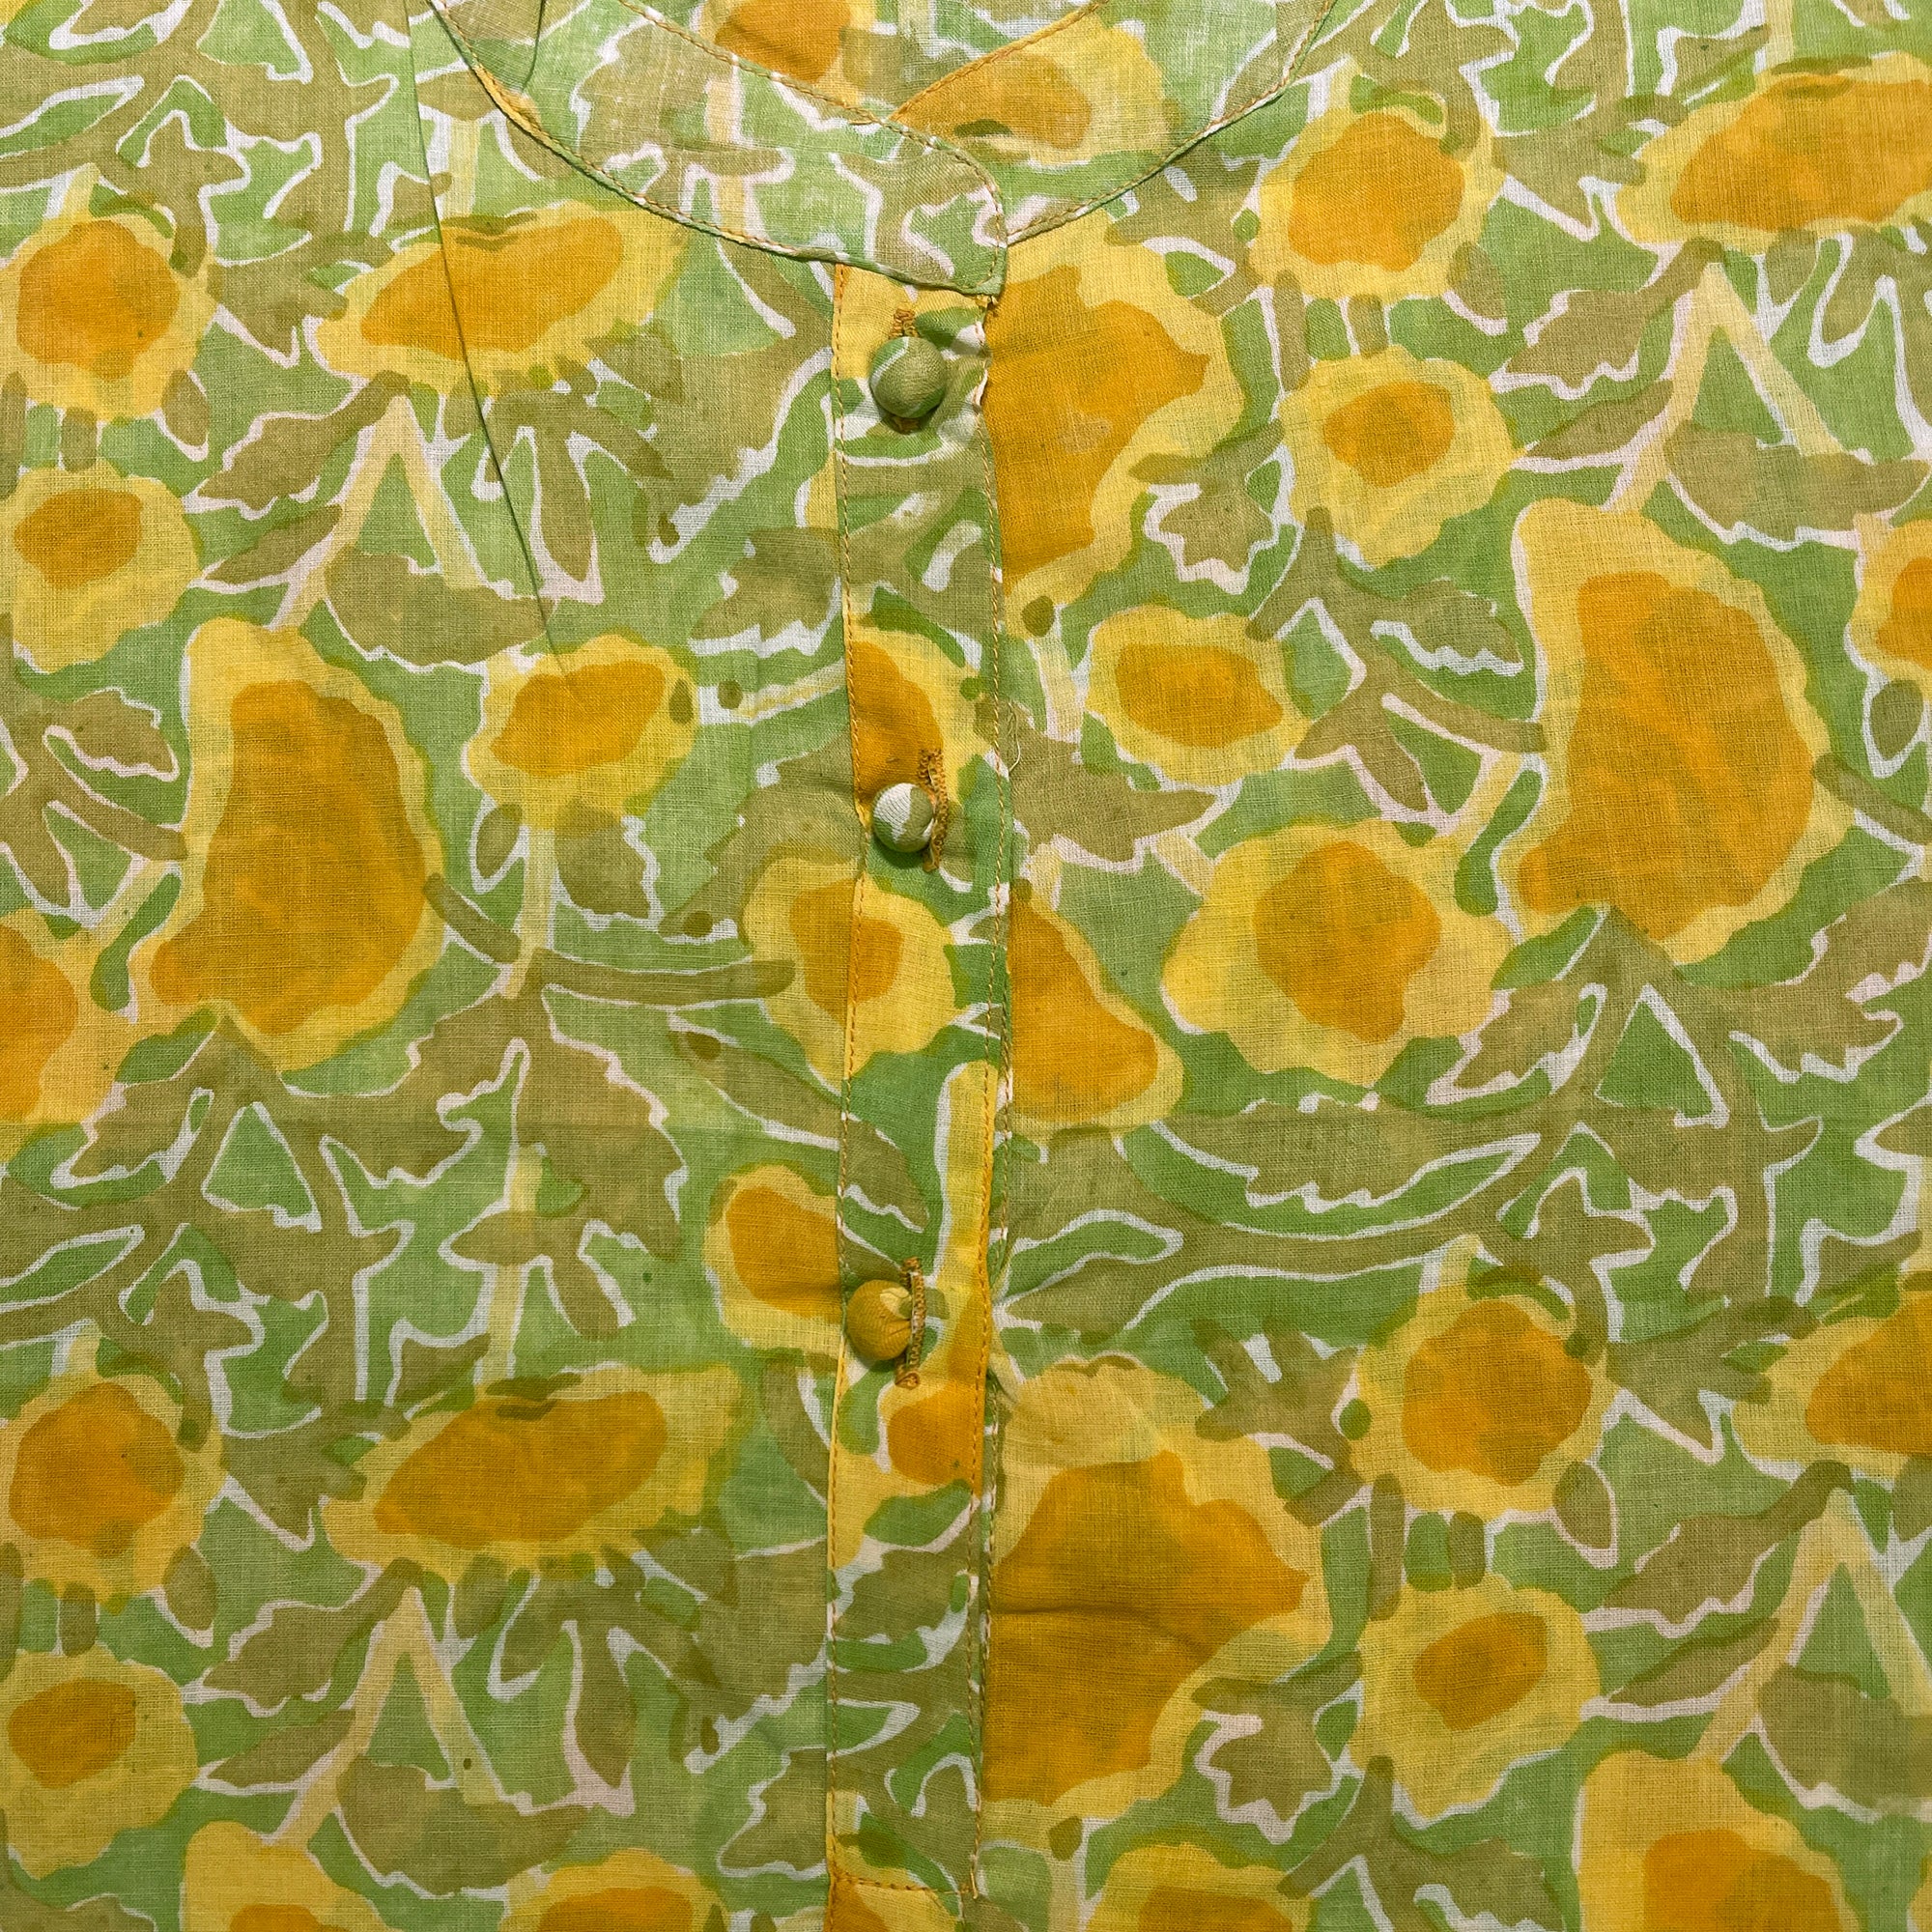 Floral Print Cotton Short Kurtas-3 Colors - Vintage India NYC